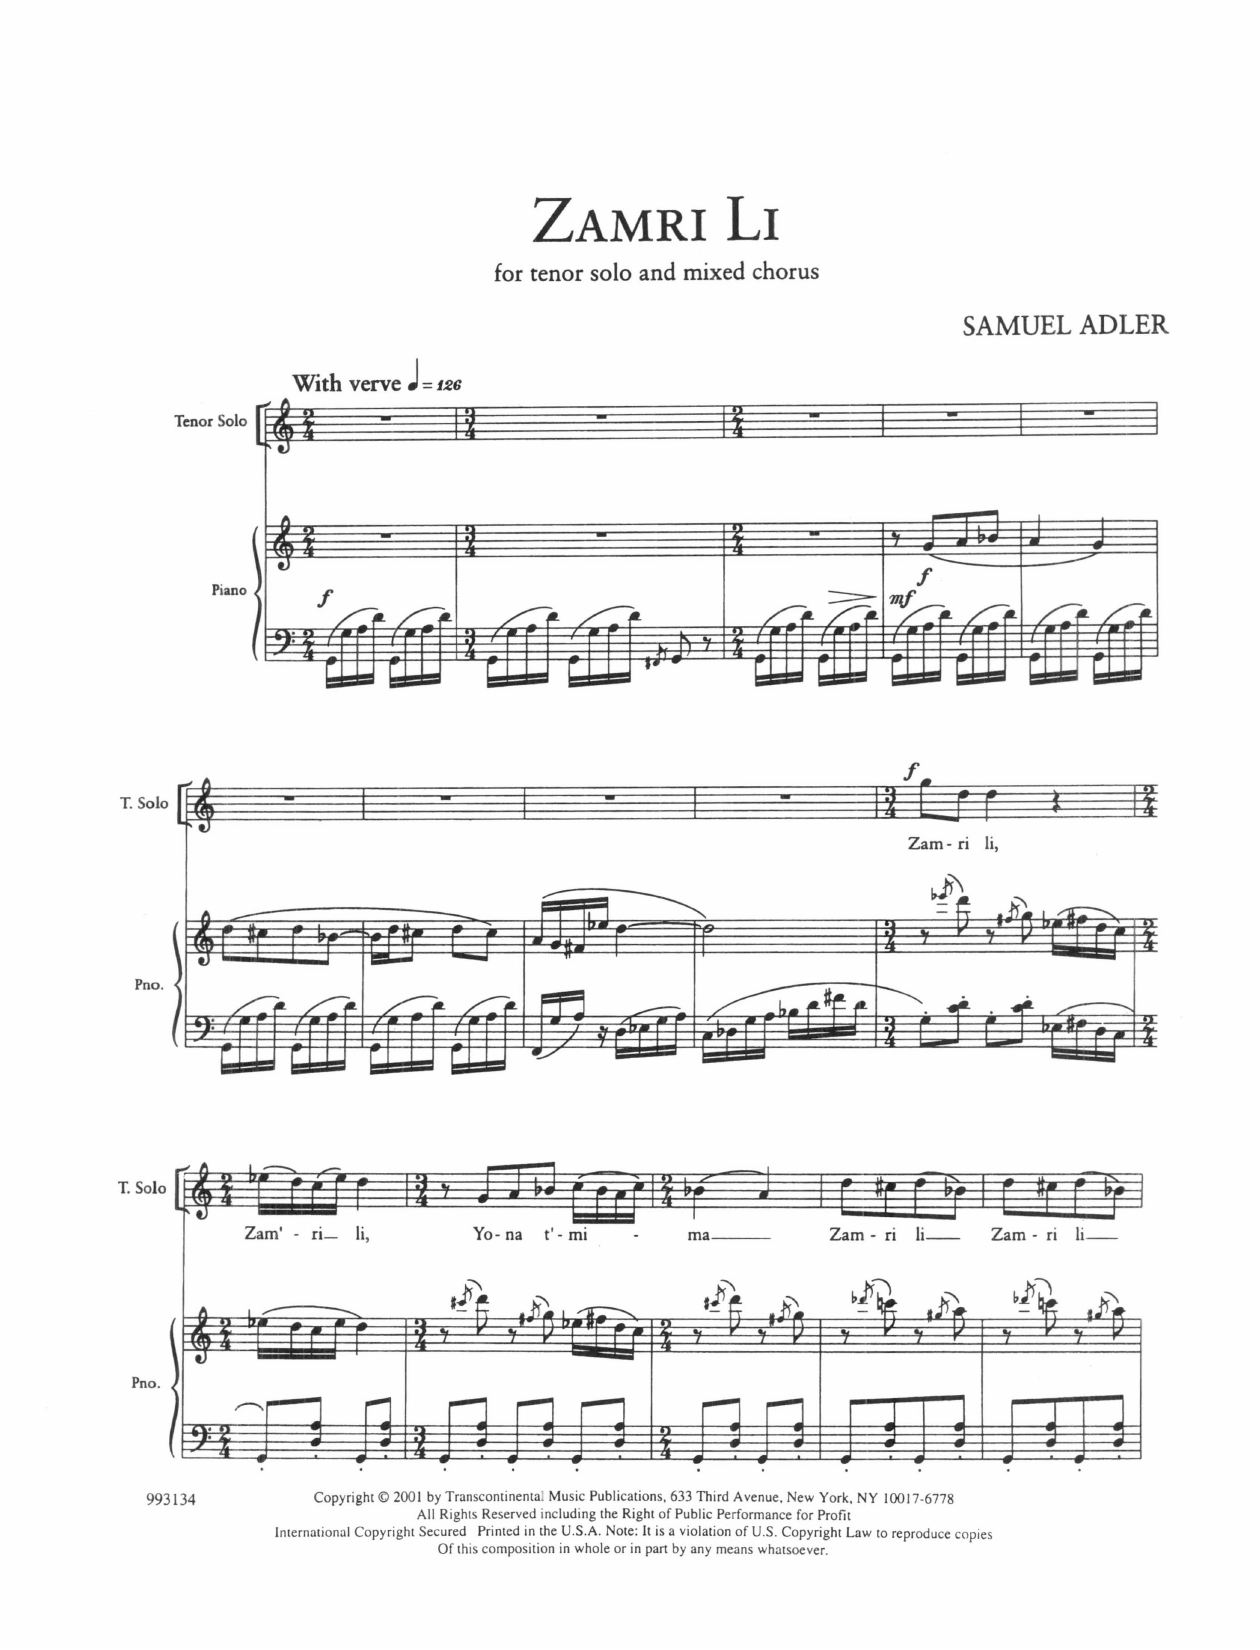 Samuel Adler Five Sephardic Choruses: Zamri Li Sheet Music Notes & Chords for SATB - Download or Print PDF